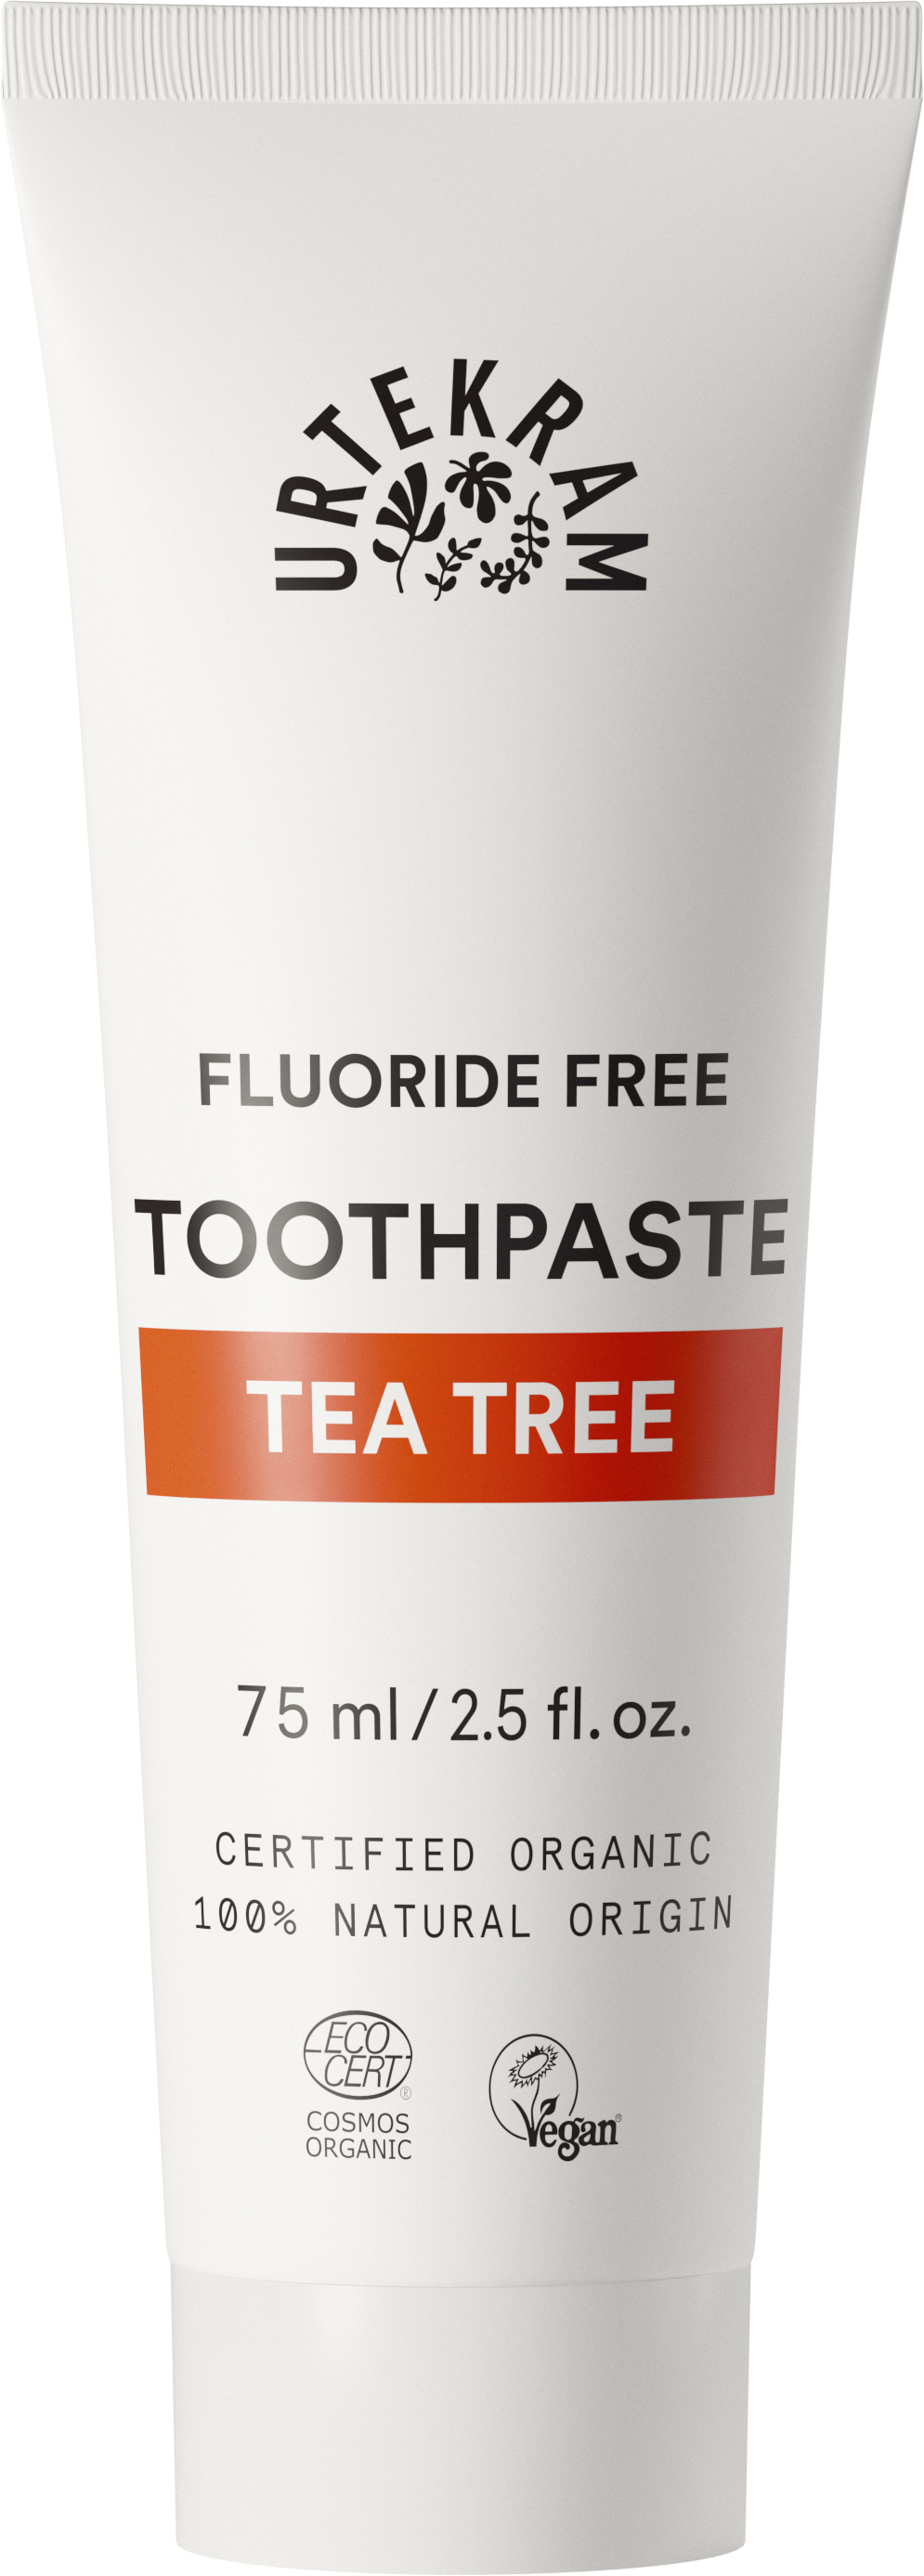 Tea Tree Toothpaste (z.fluoride) - Urtekram